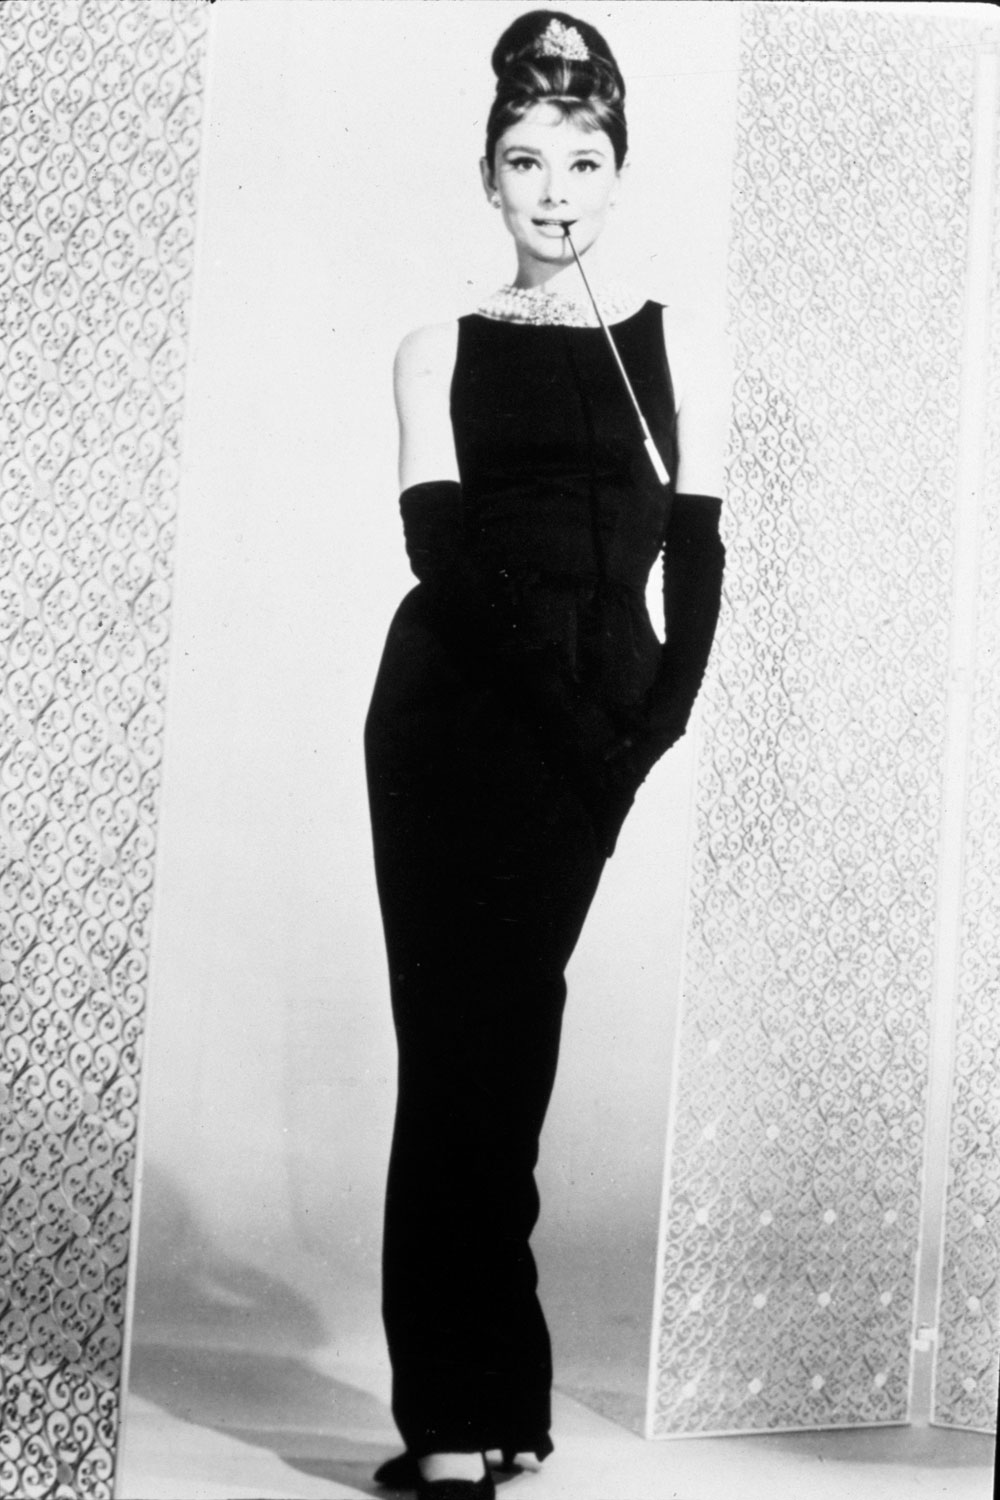 Audrey Hepburn in her Breakfast at Tiffany's dress (1961)